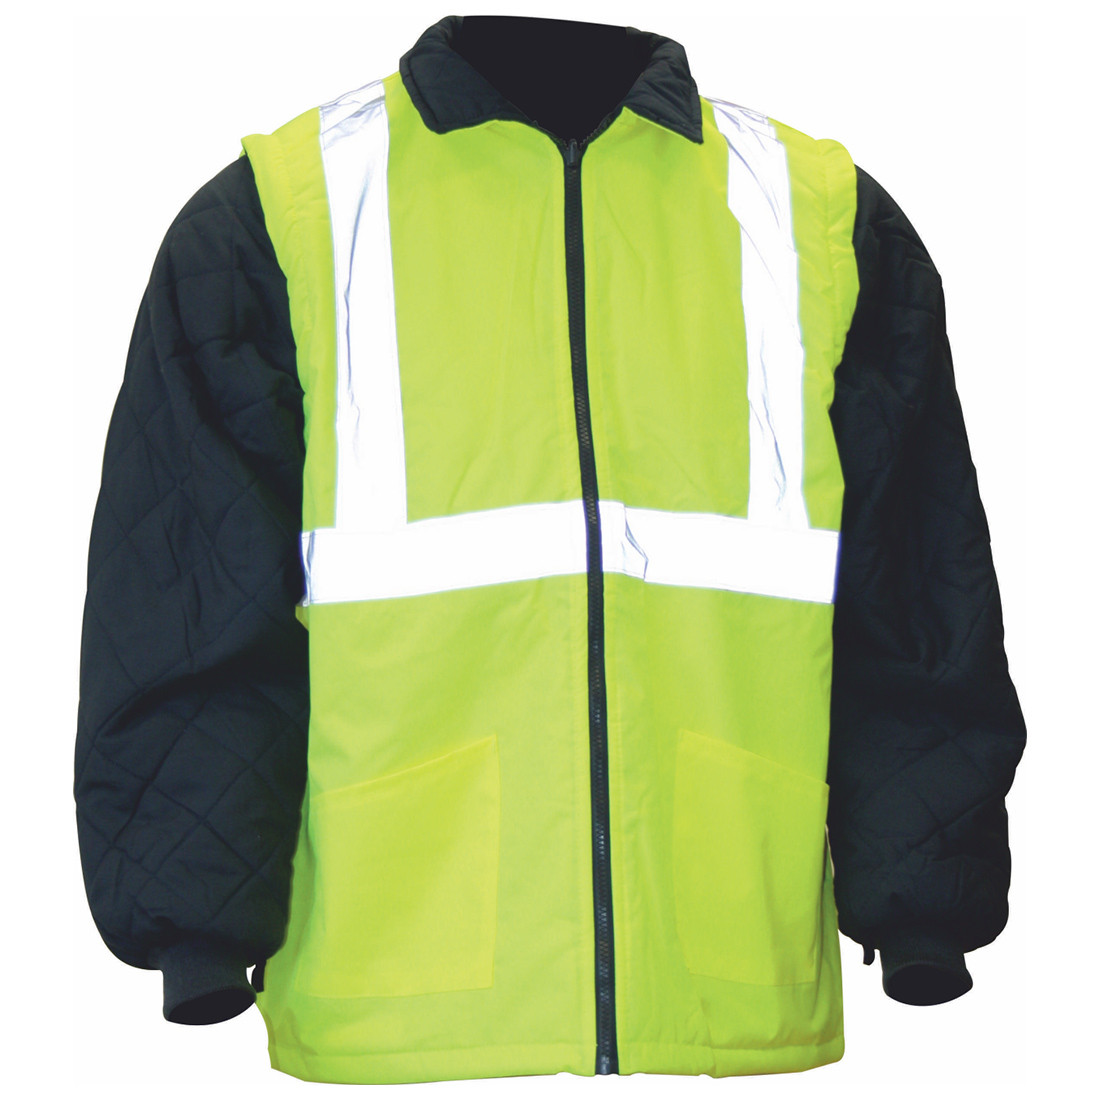 Hway 4in1 Jacket - Safetywear